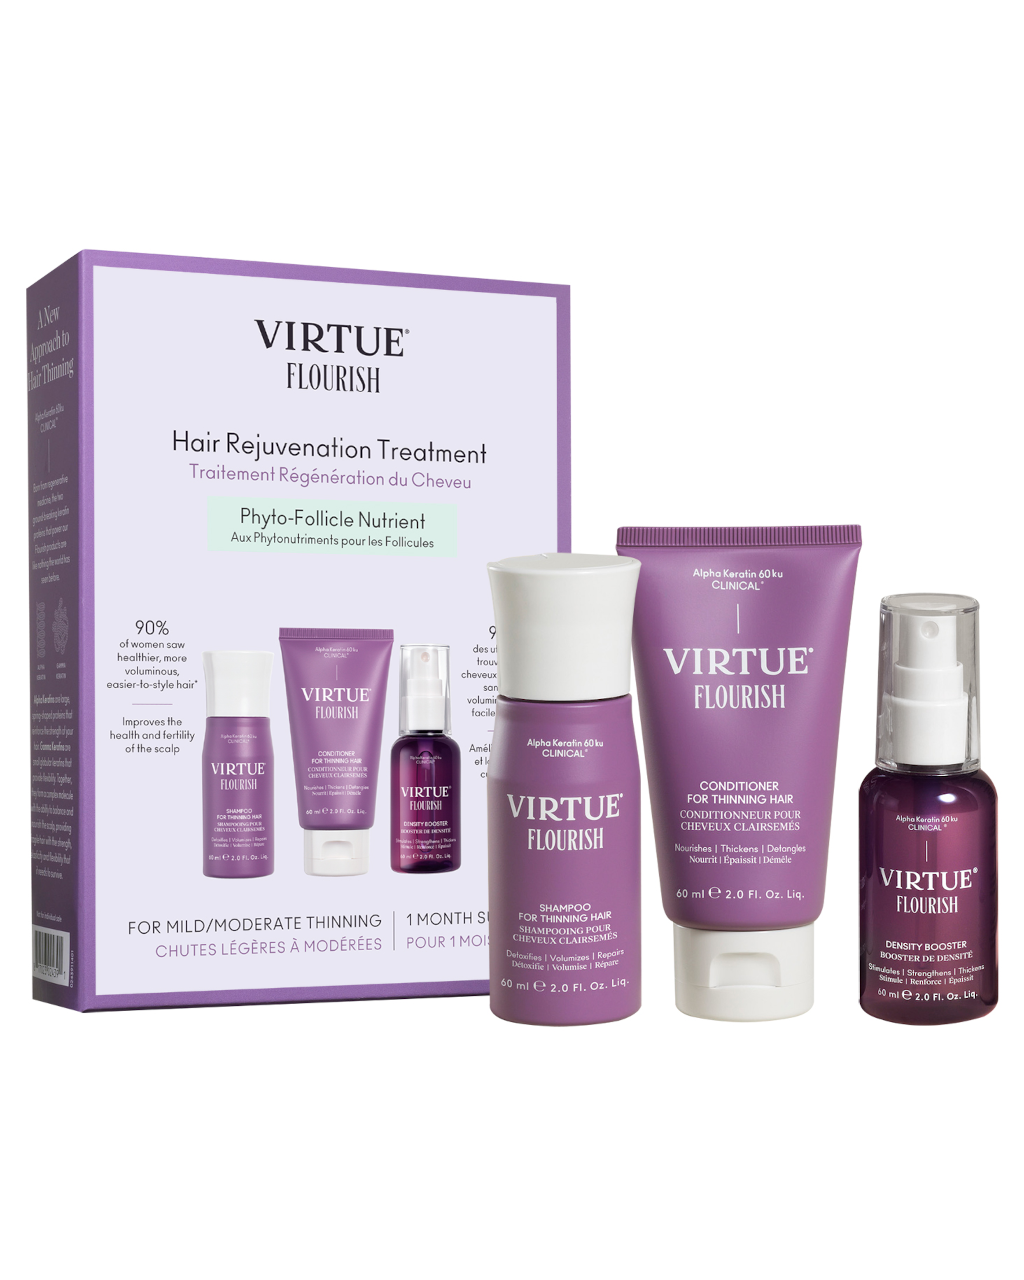 Hair Rejuvenation Treatment (Phyto-follicle Nutrient)